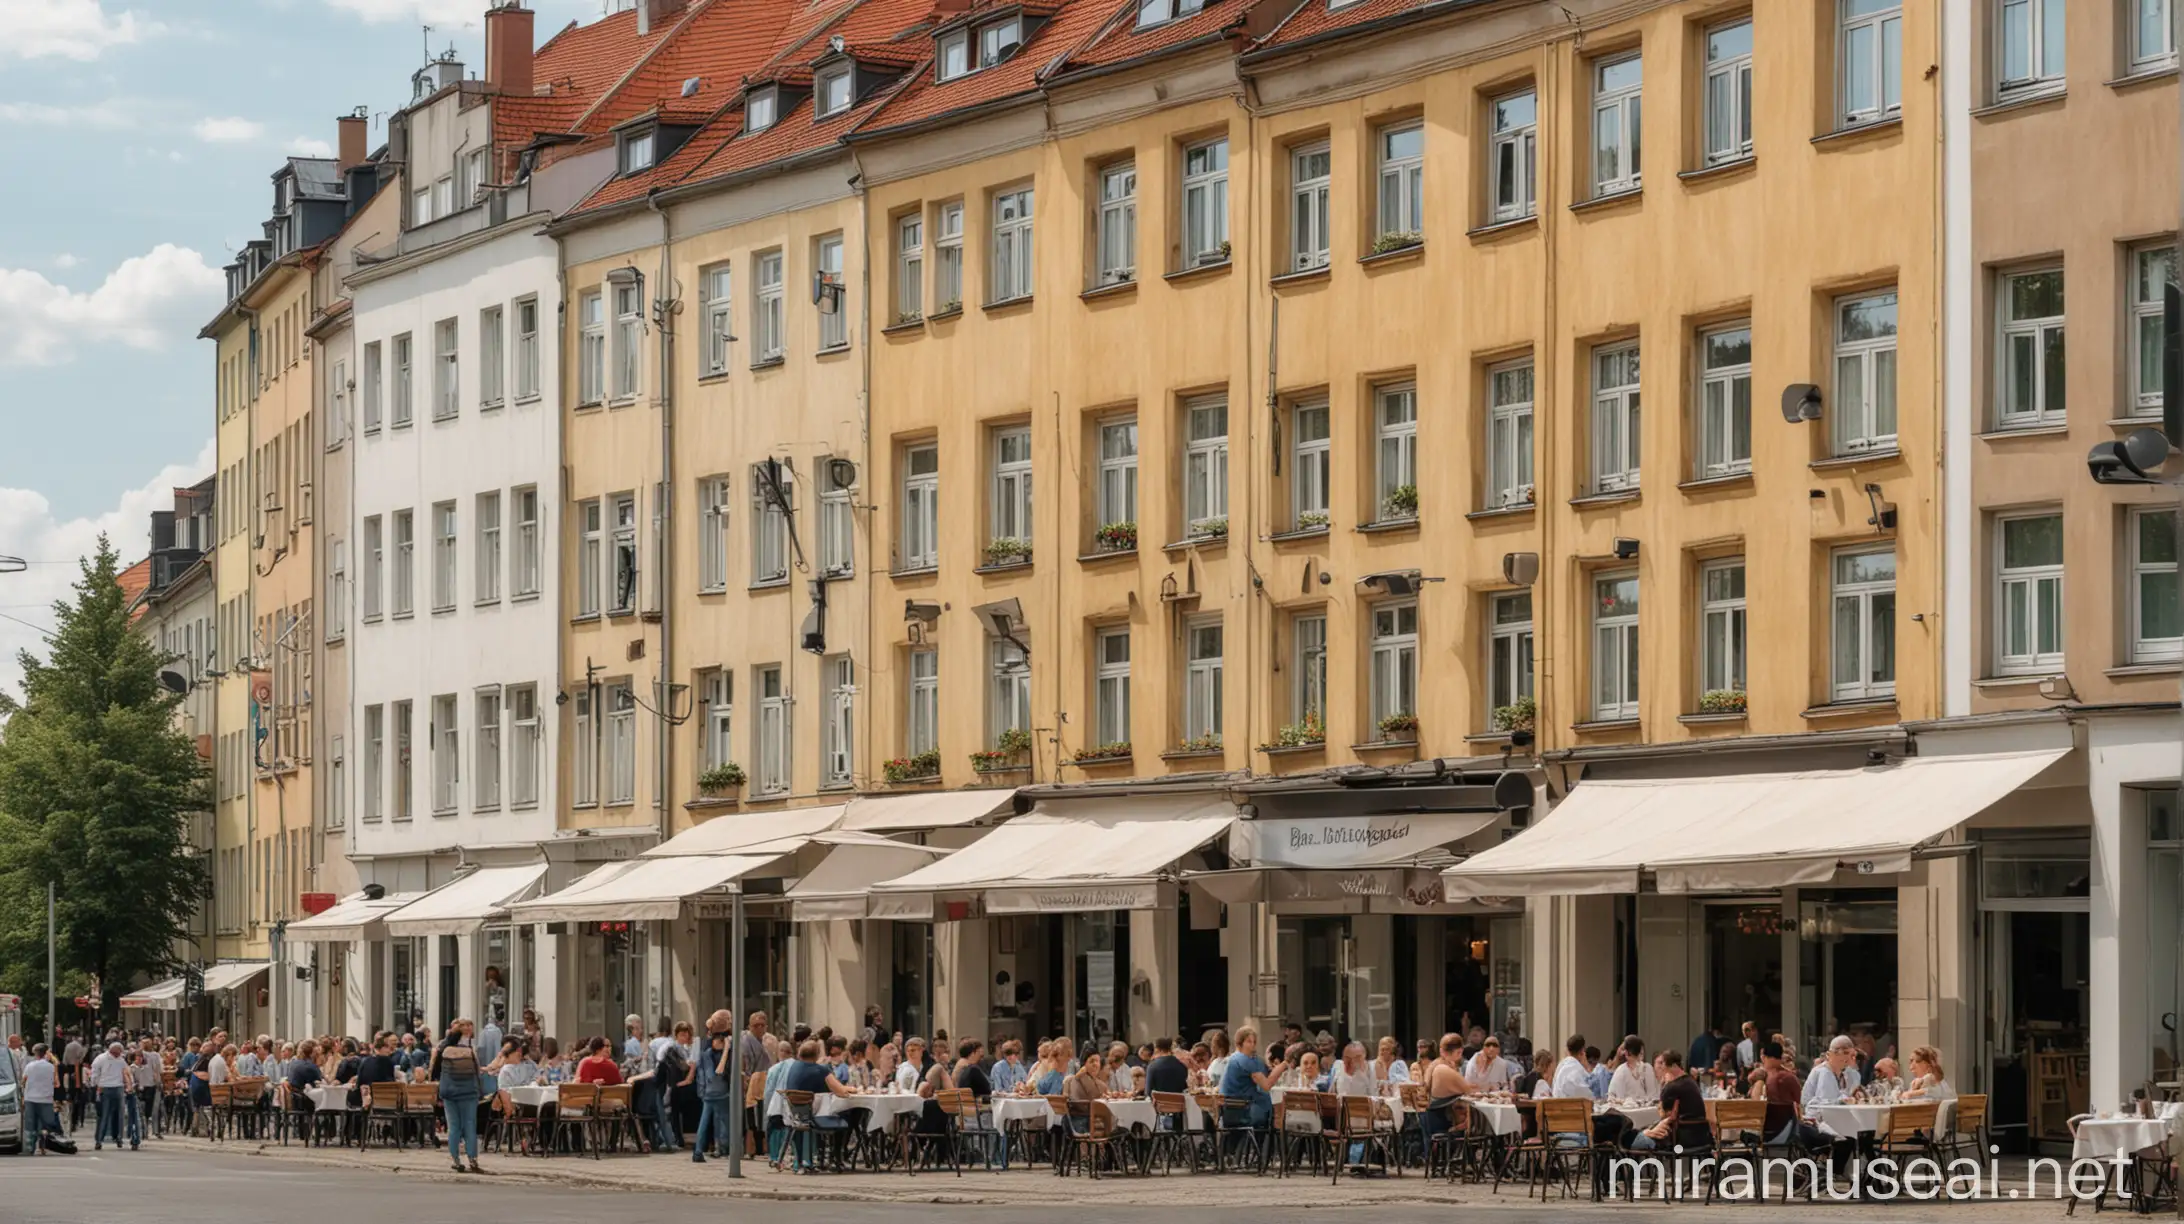 Berlin Germany Street Scene Rows of Houses with GroundFloor Restaurants and Pedestrian Traffic